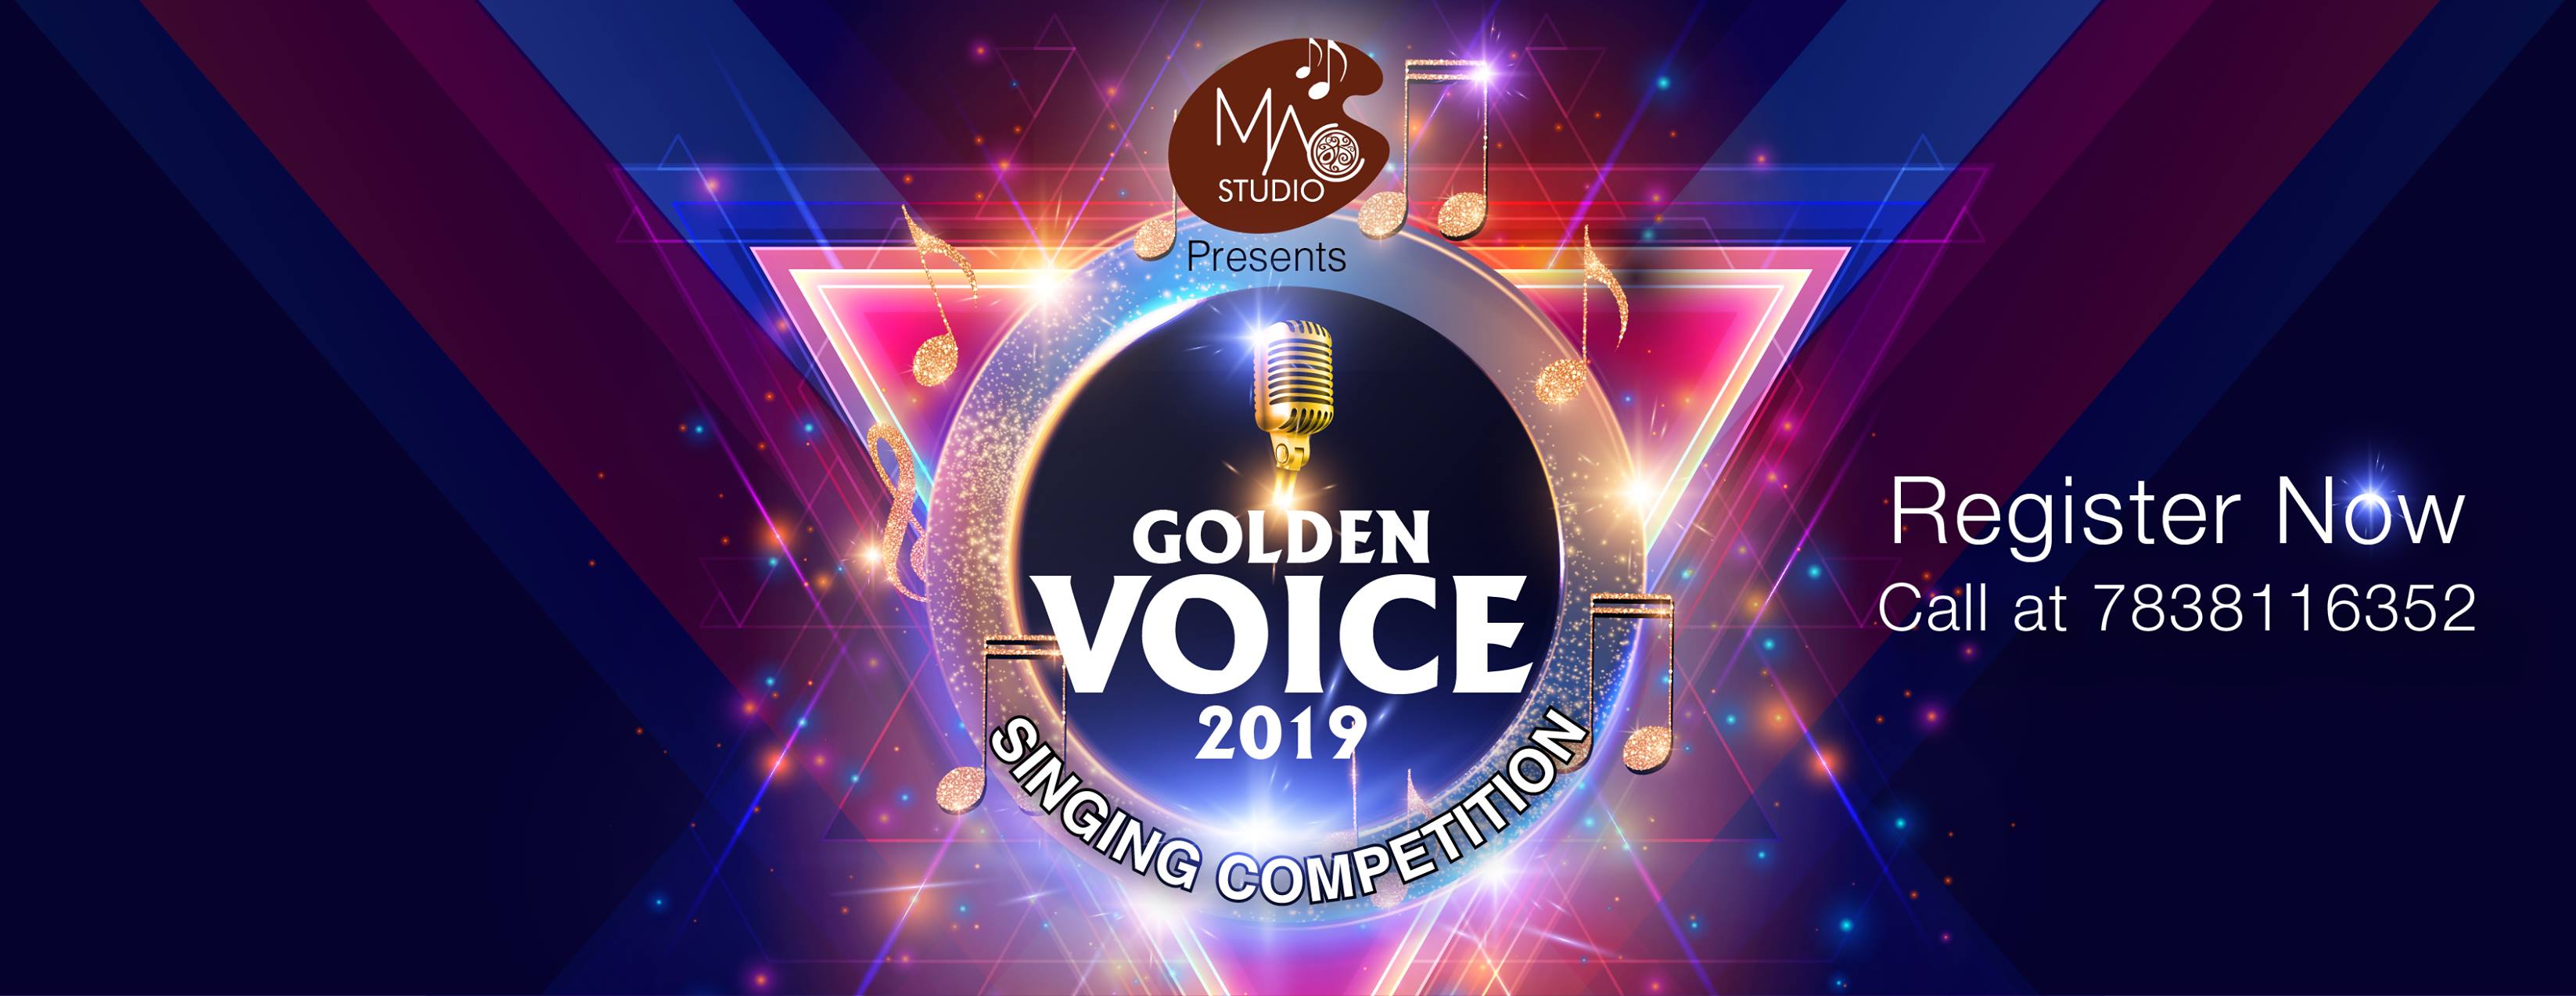 MAC Studio Presents Golden Voice 2019 - Singing Competition